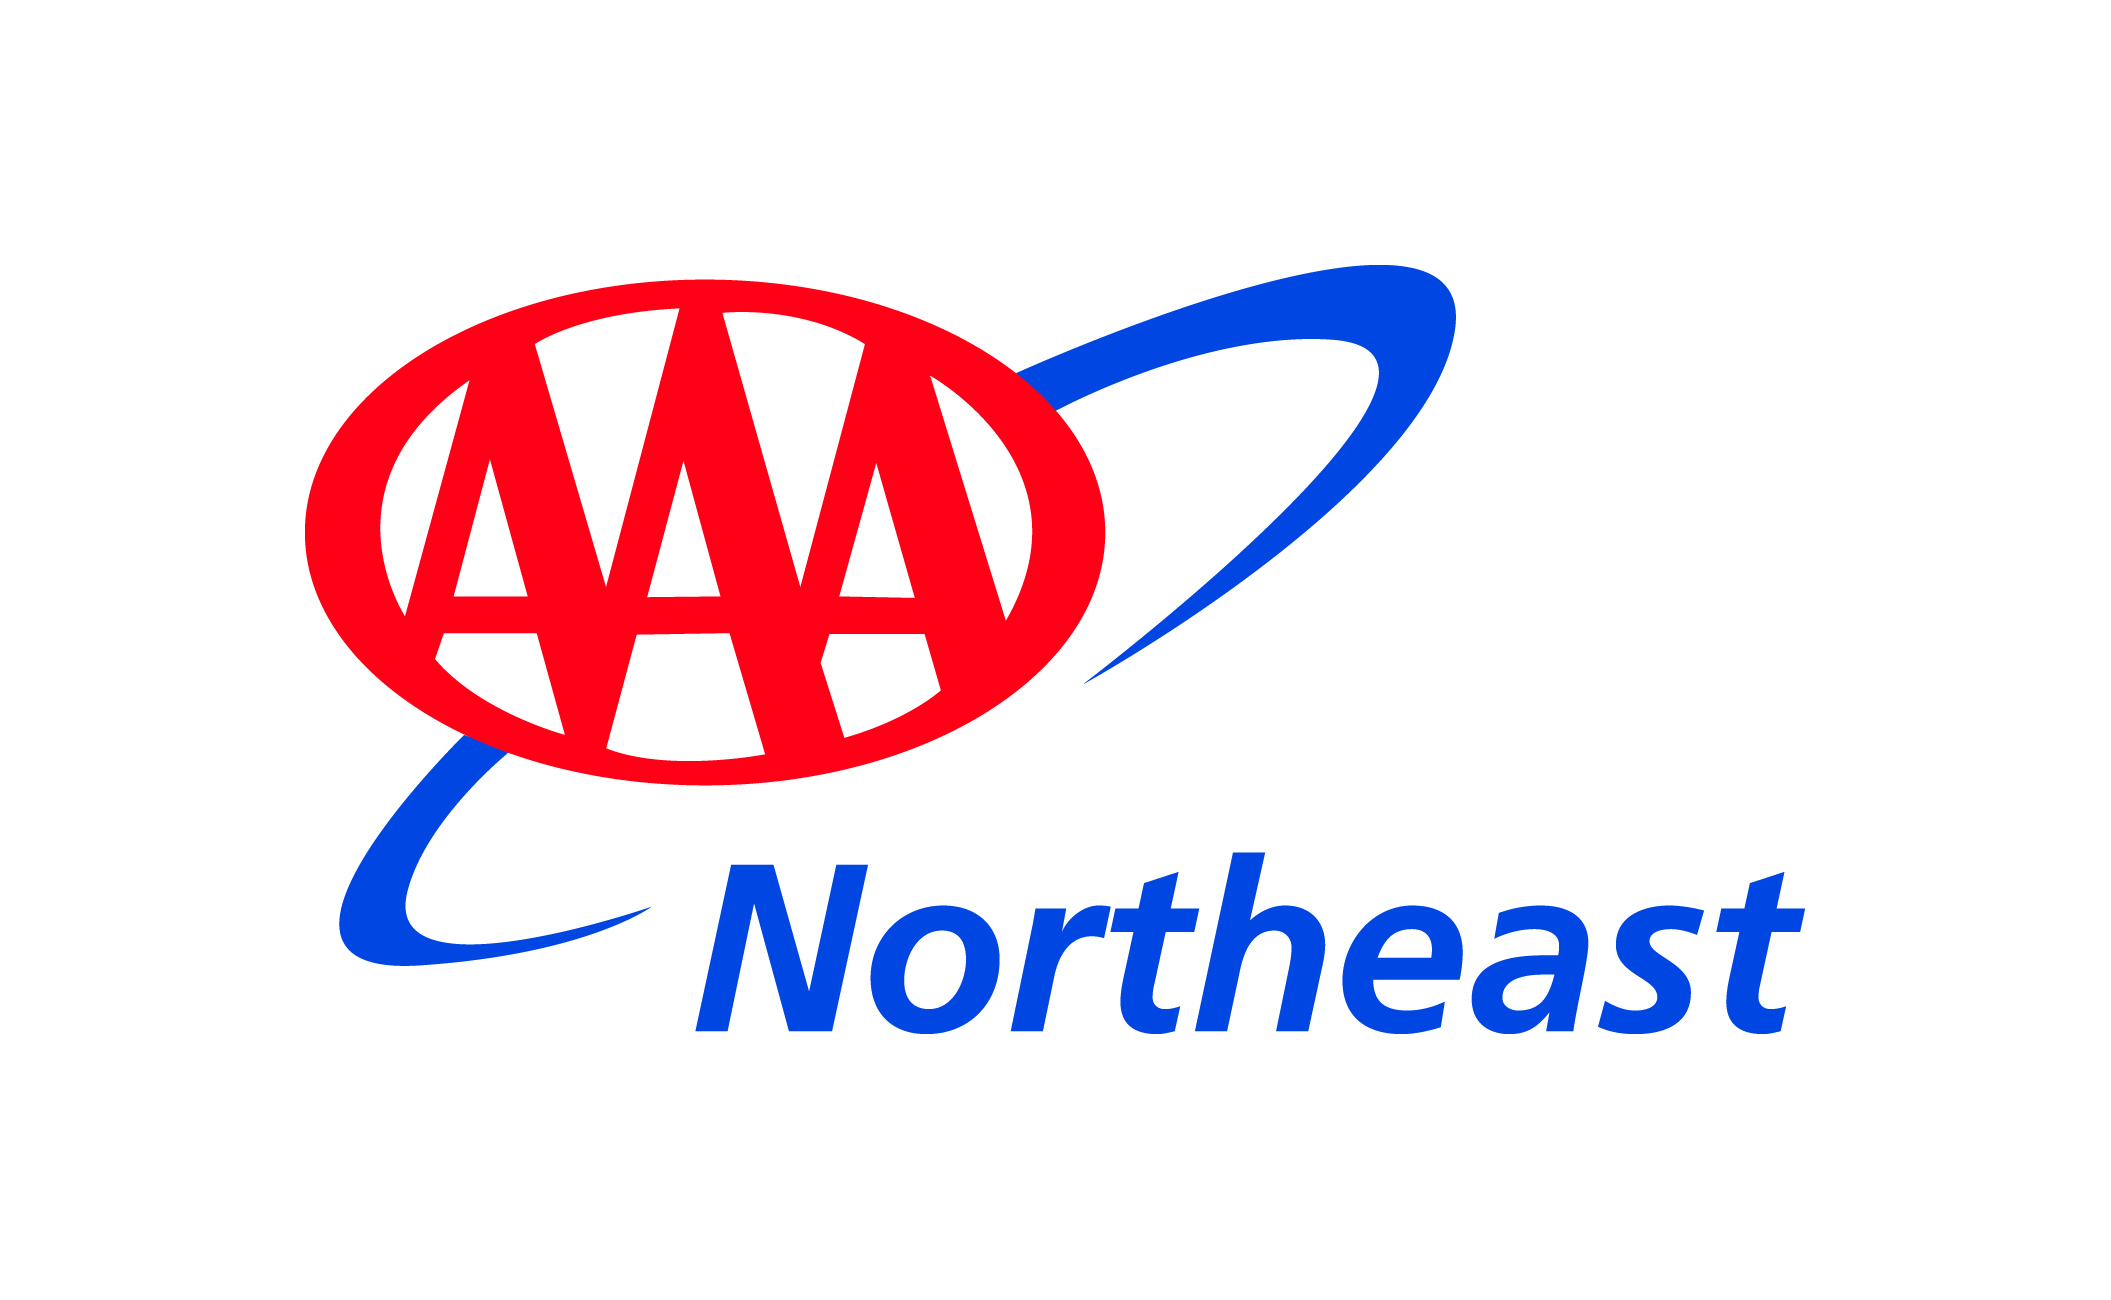 AAA Northeas